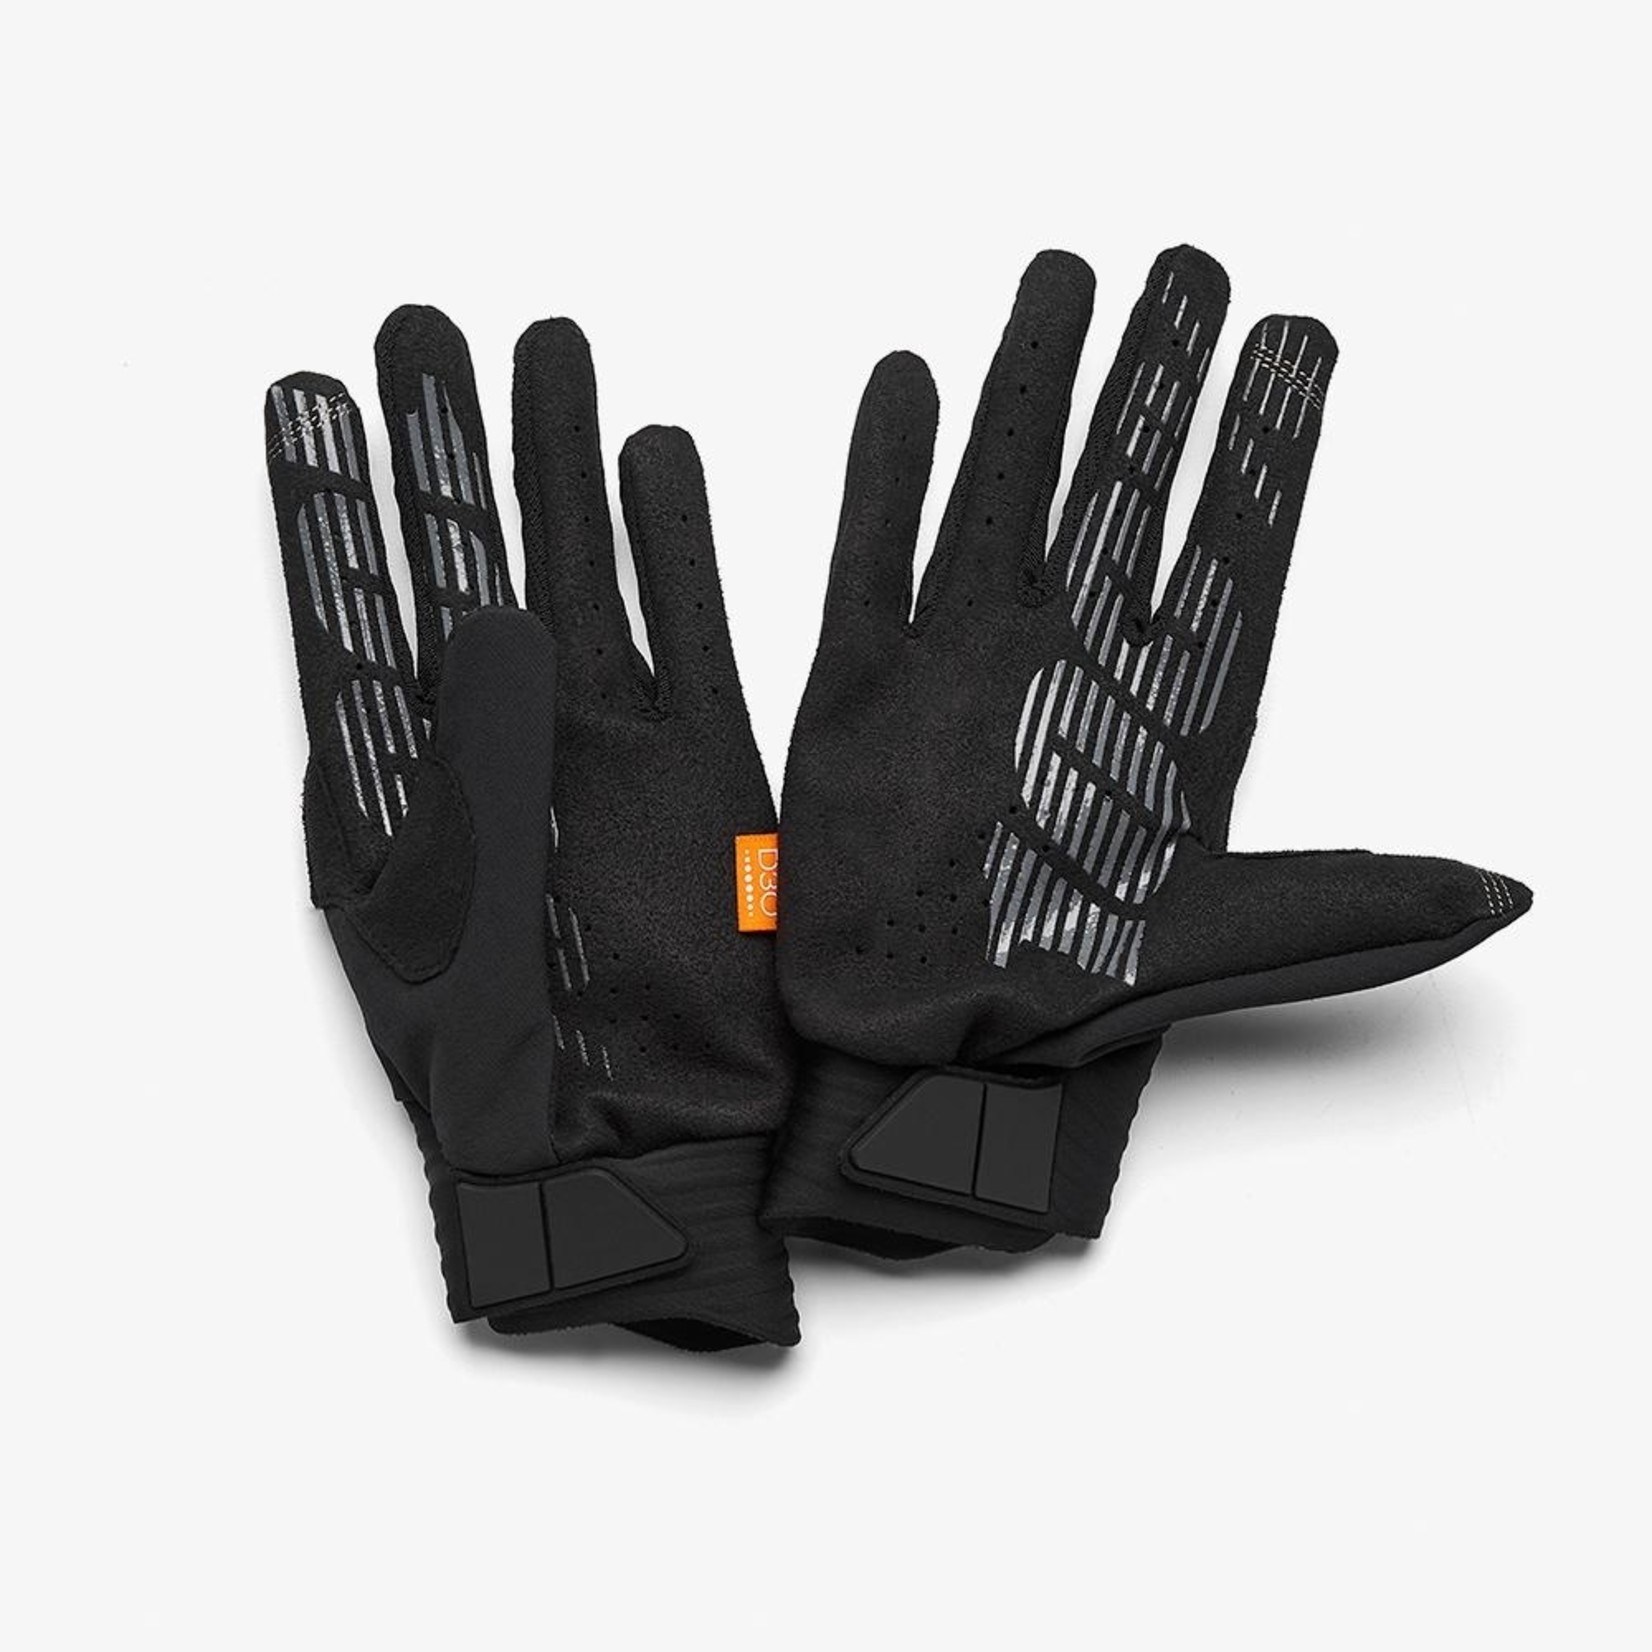 100 Percent 100% COGNITO D30 knuckles Highest Level Bike/Cycling Gloves - Fluo Orange/Black